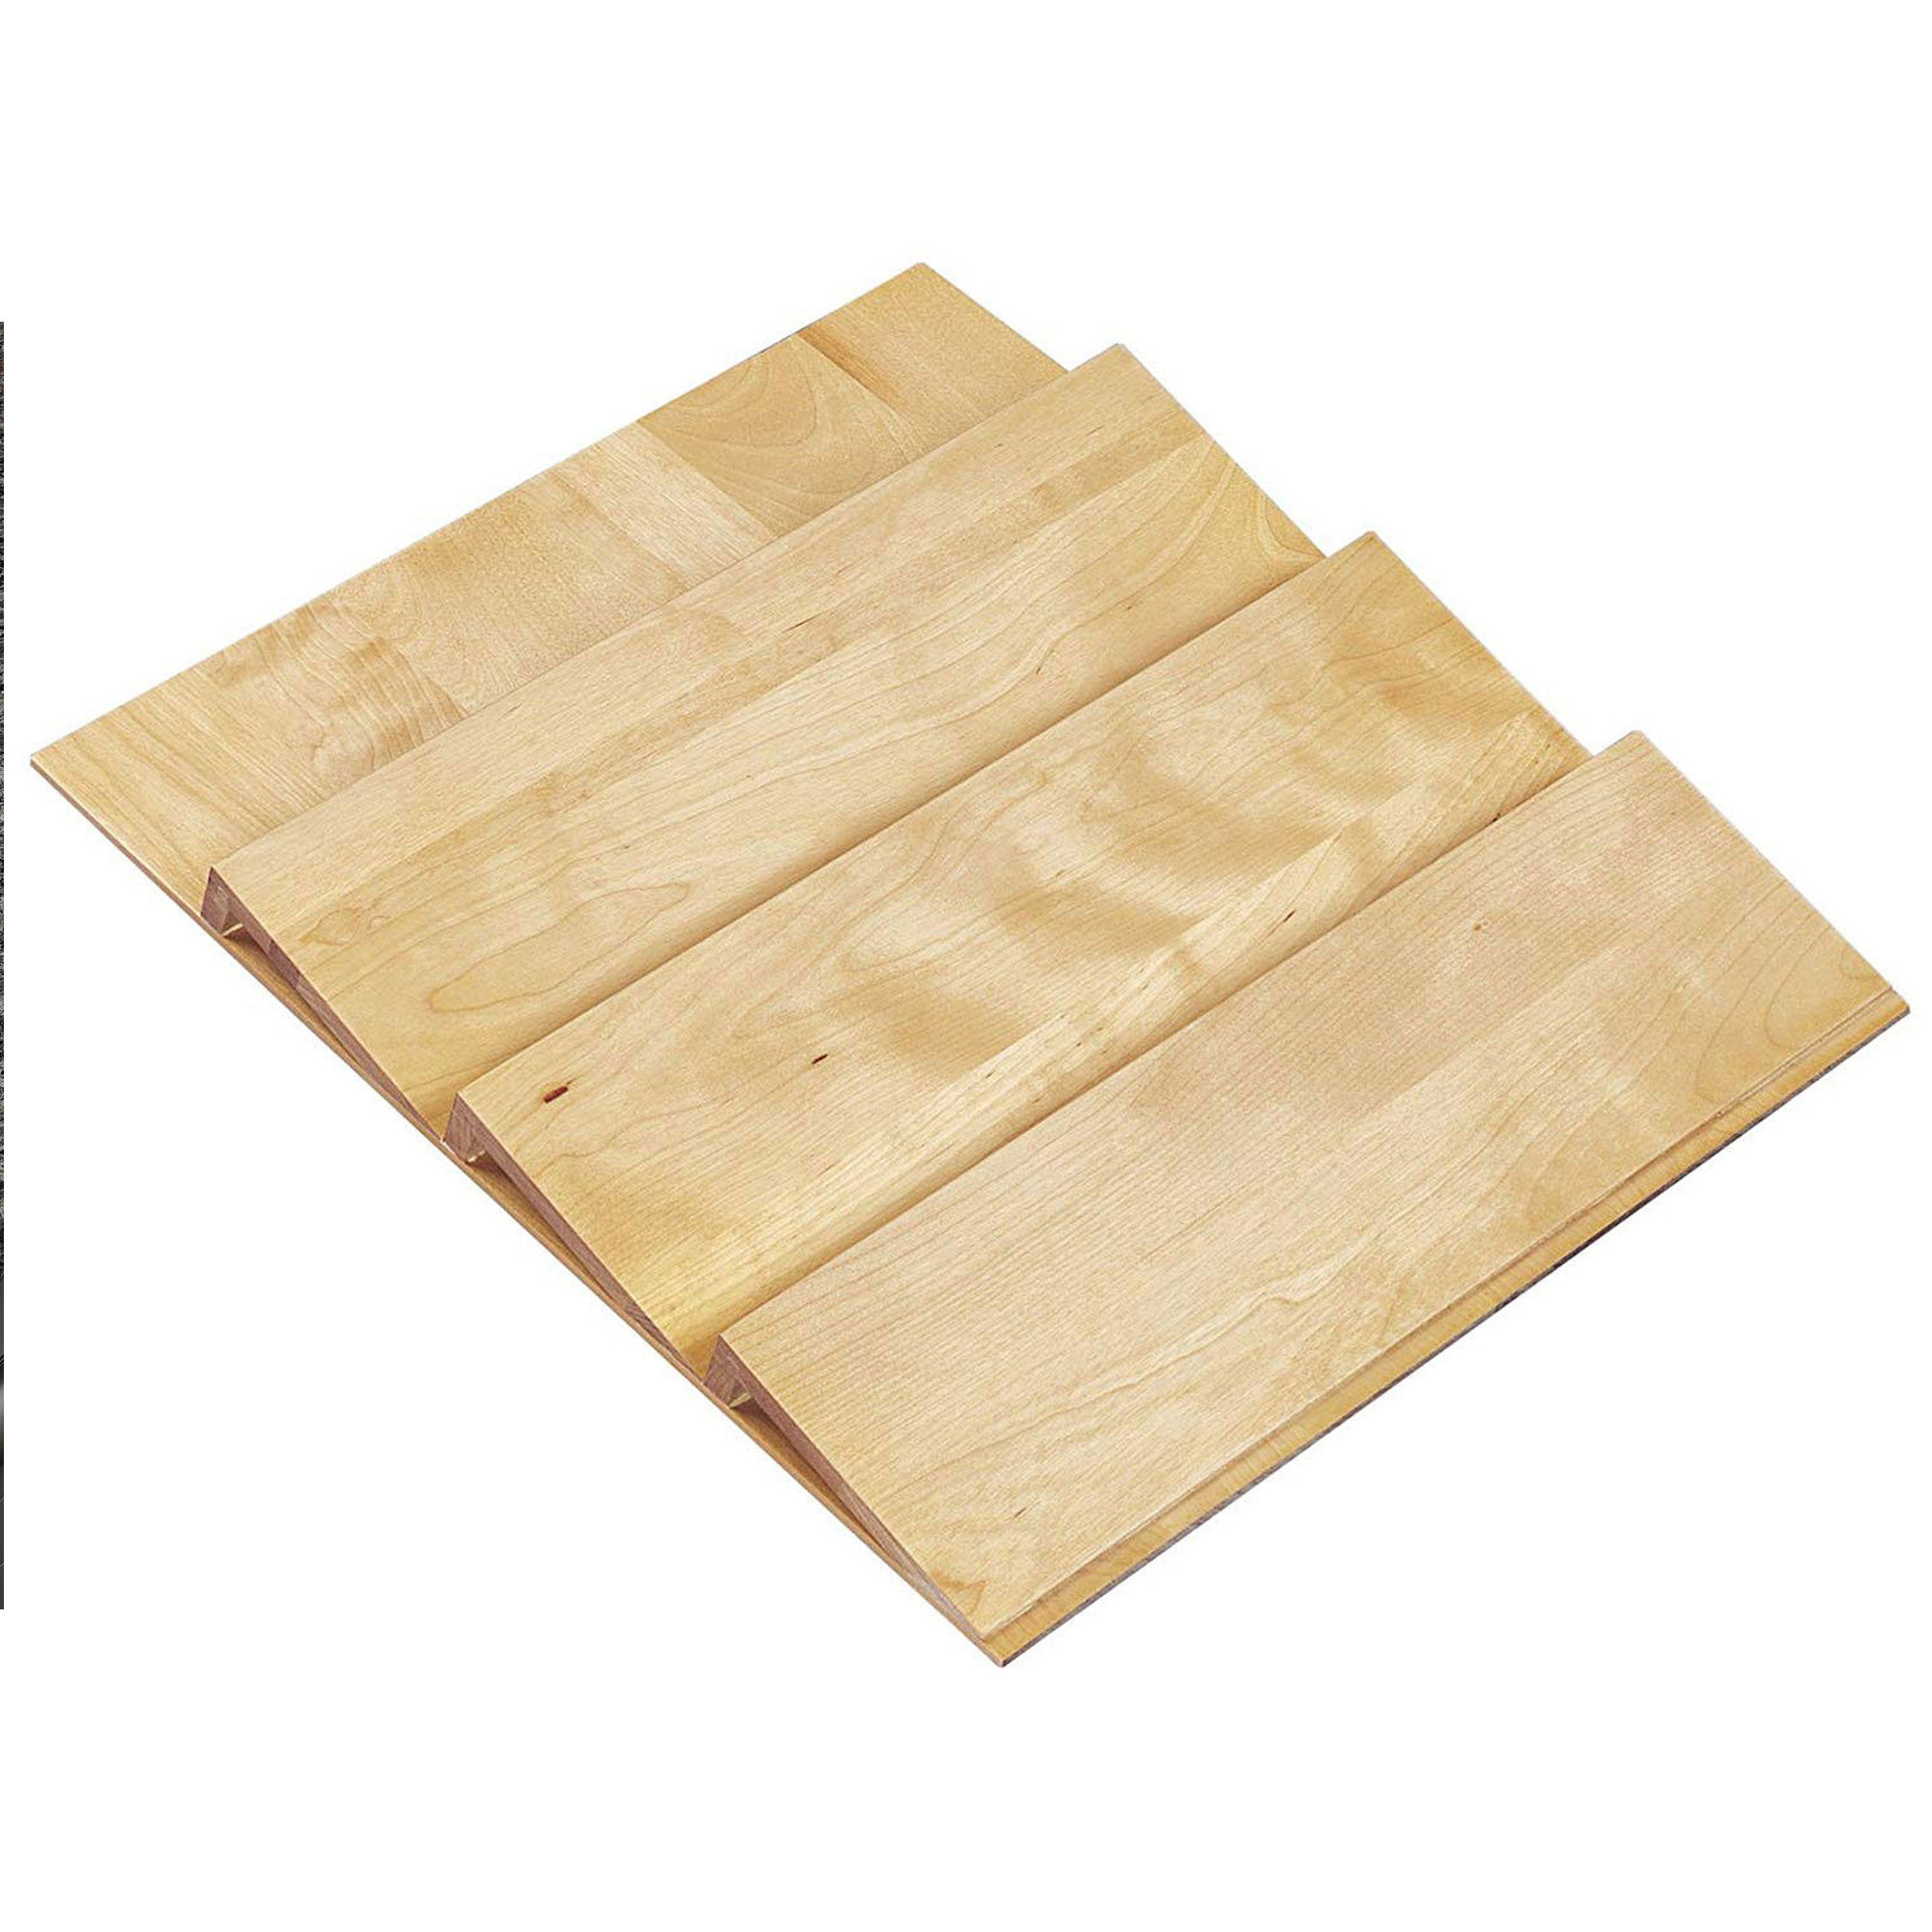 Rev-A-Shelf Walnut Trim to Fit Drawer Peg Board Insert with Wooden